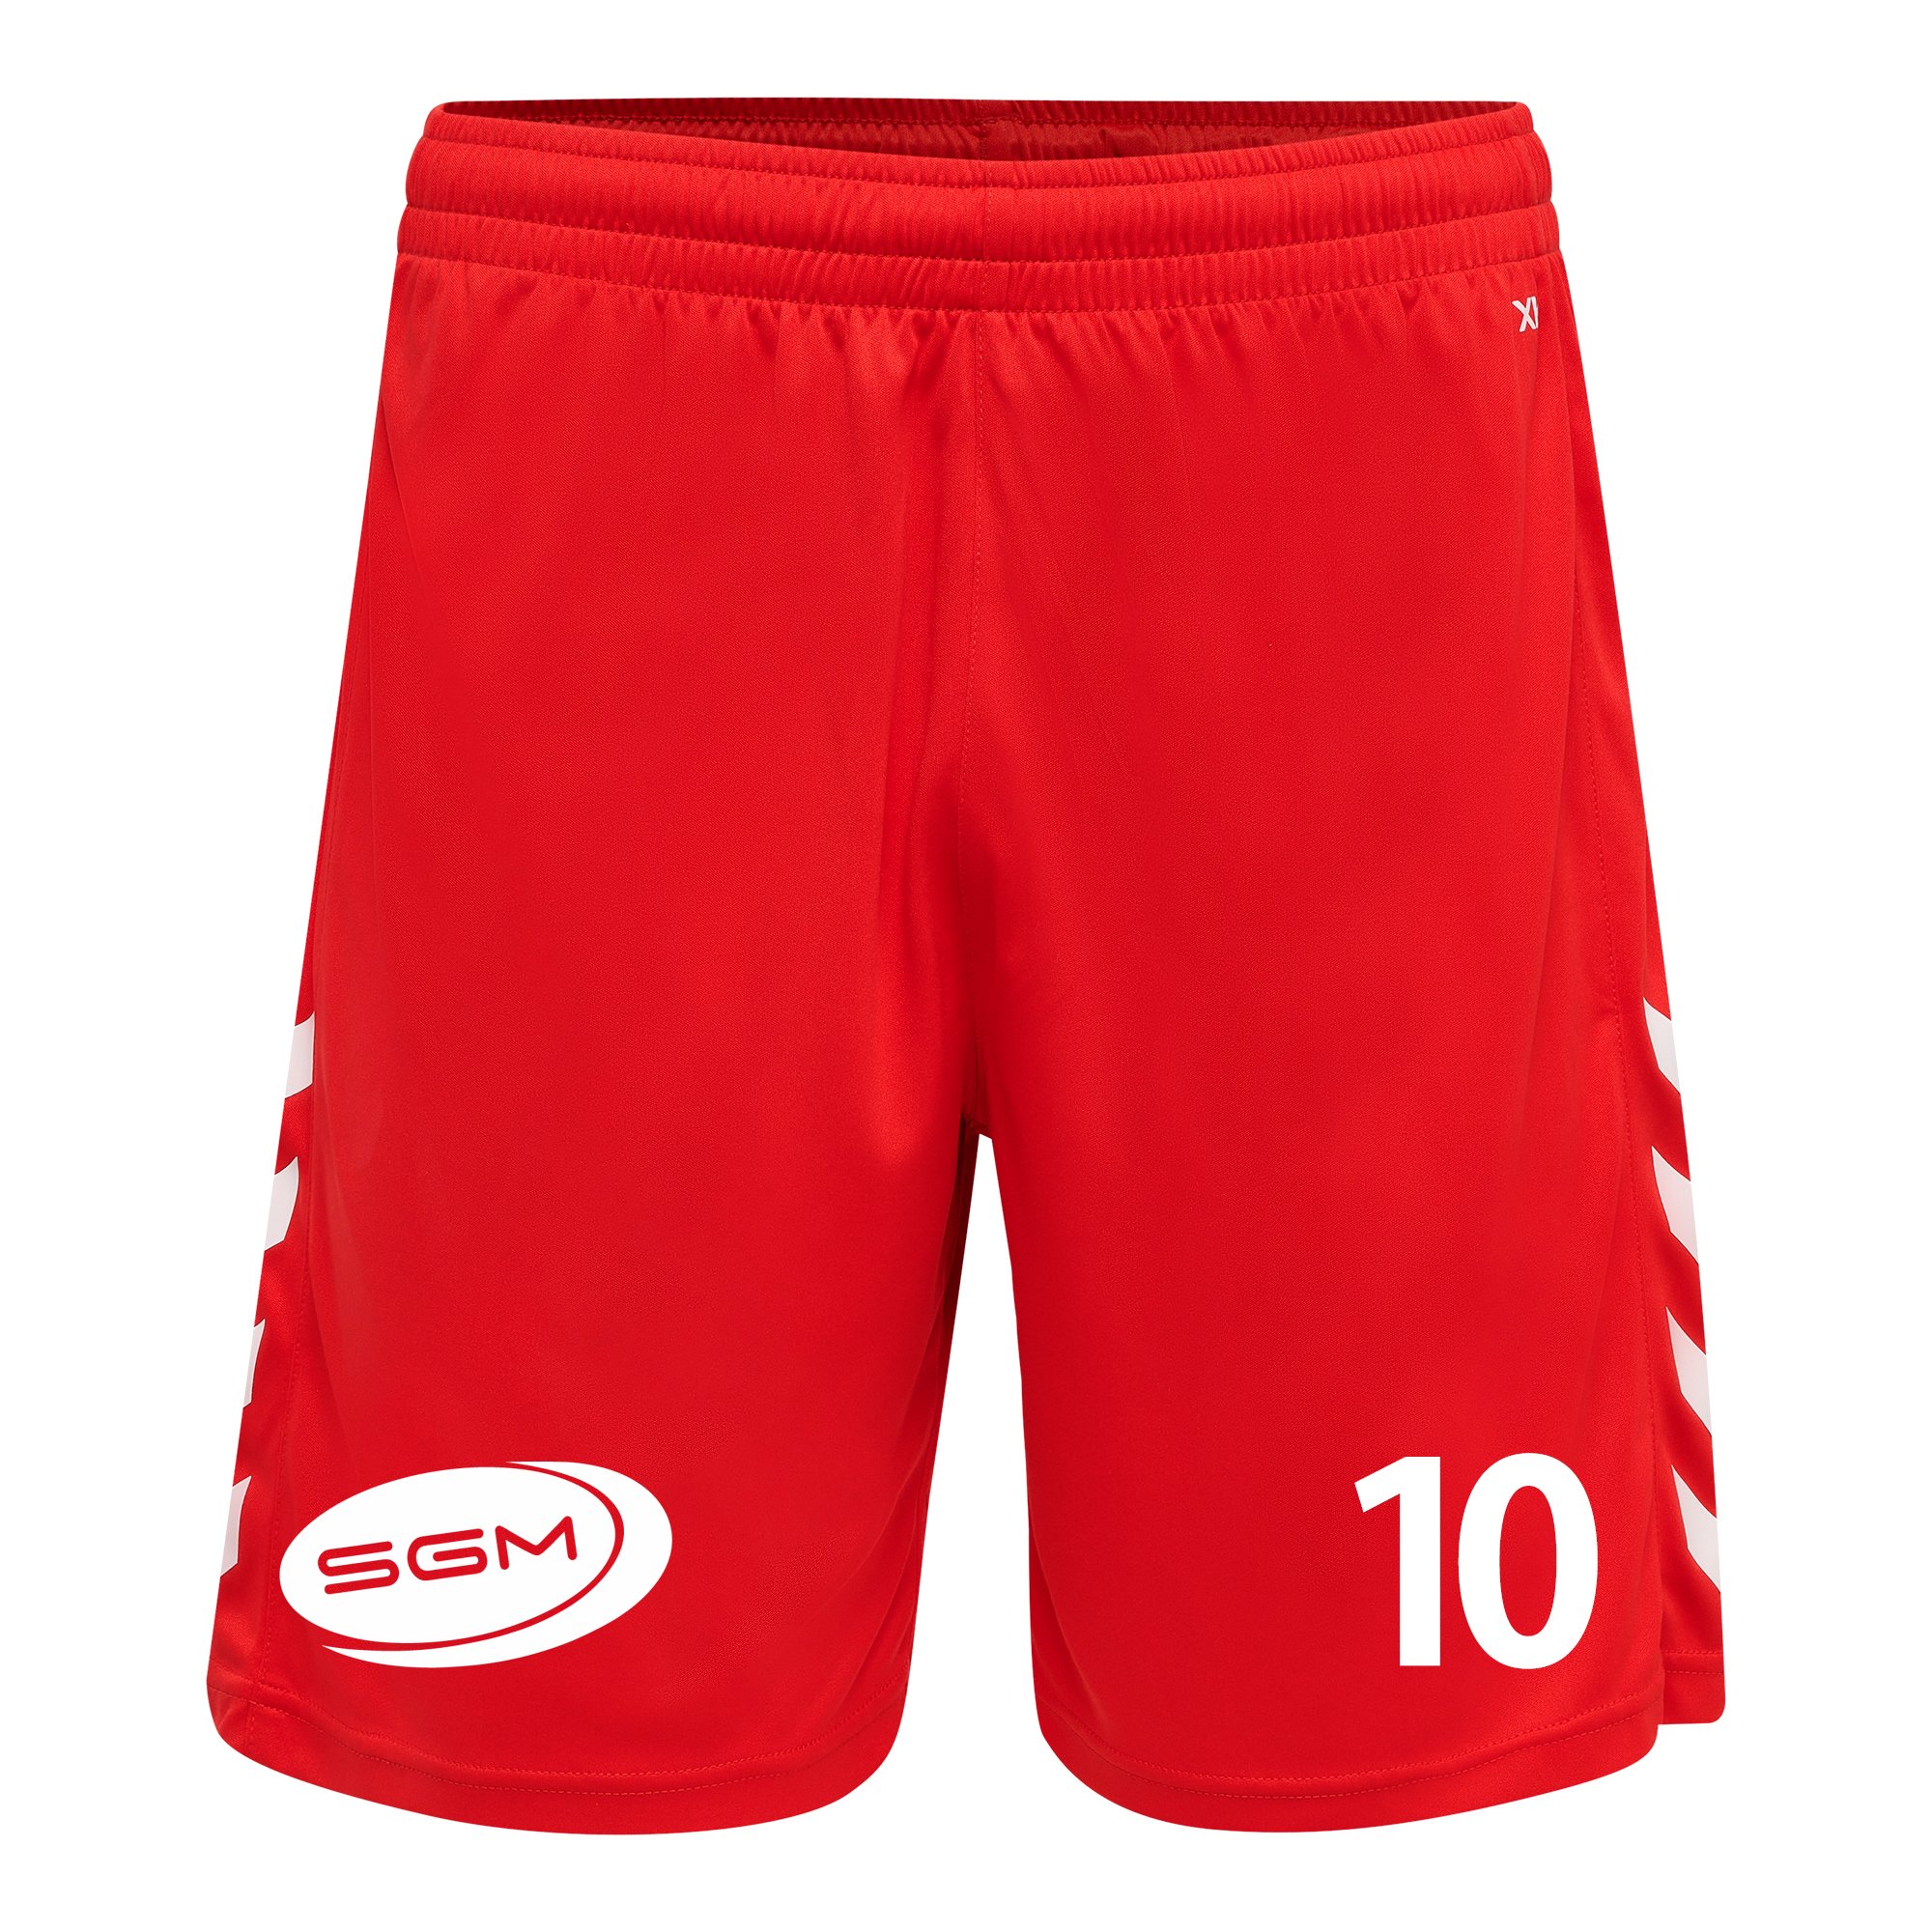 SG Misburg Shorts